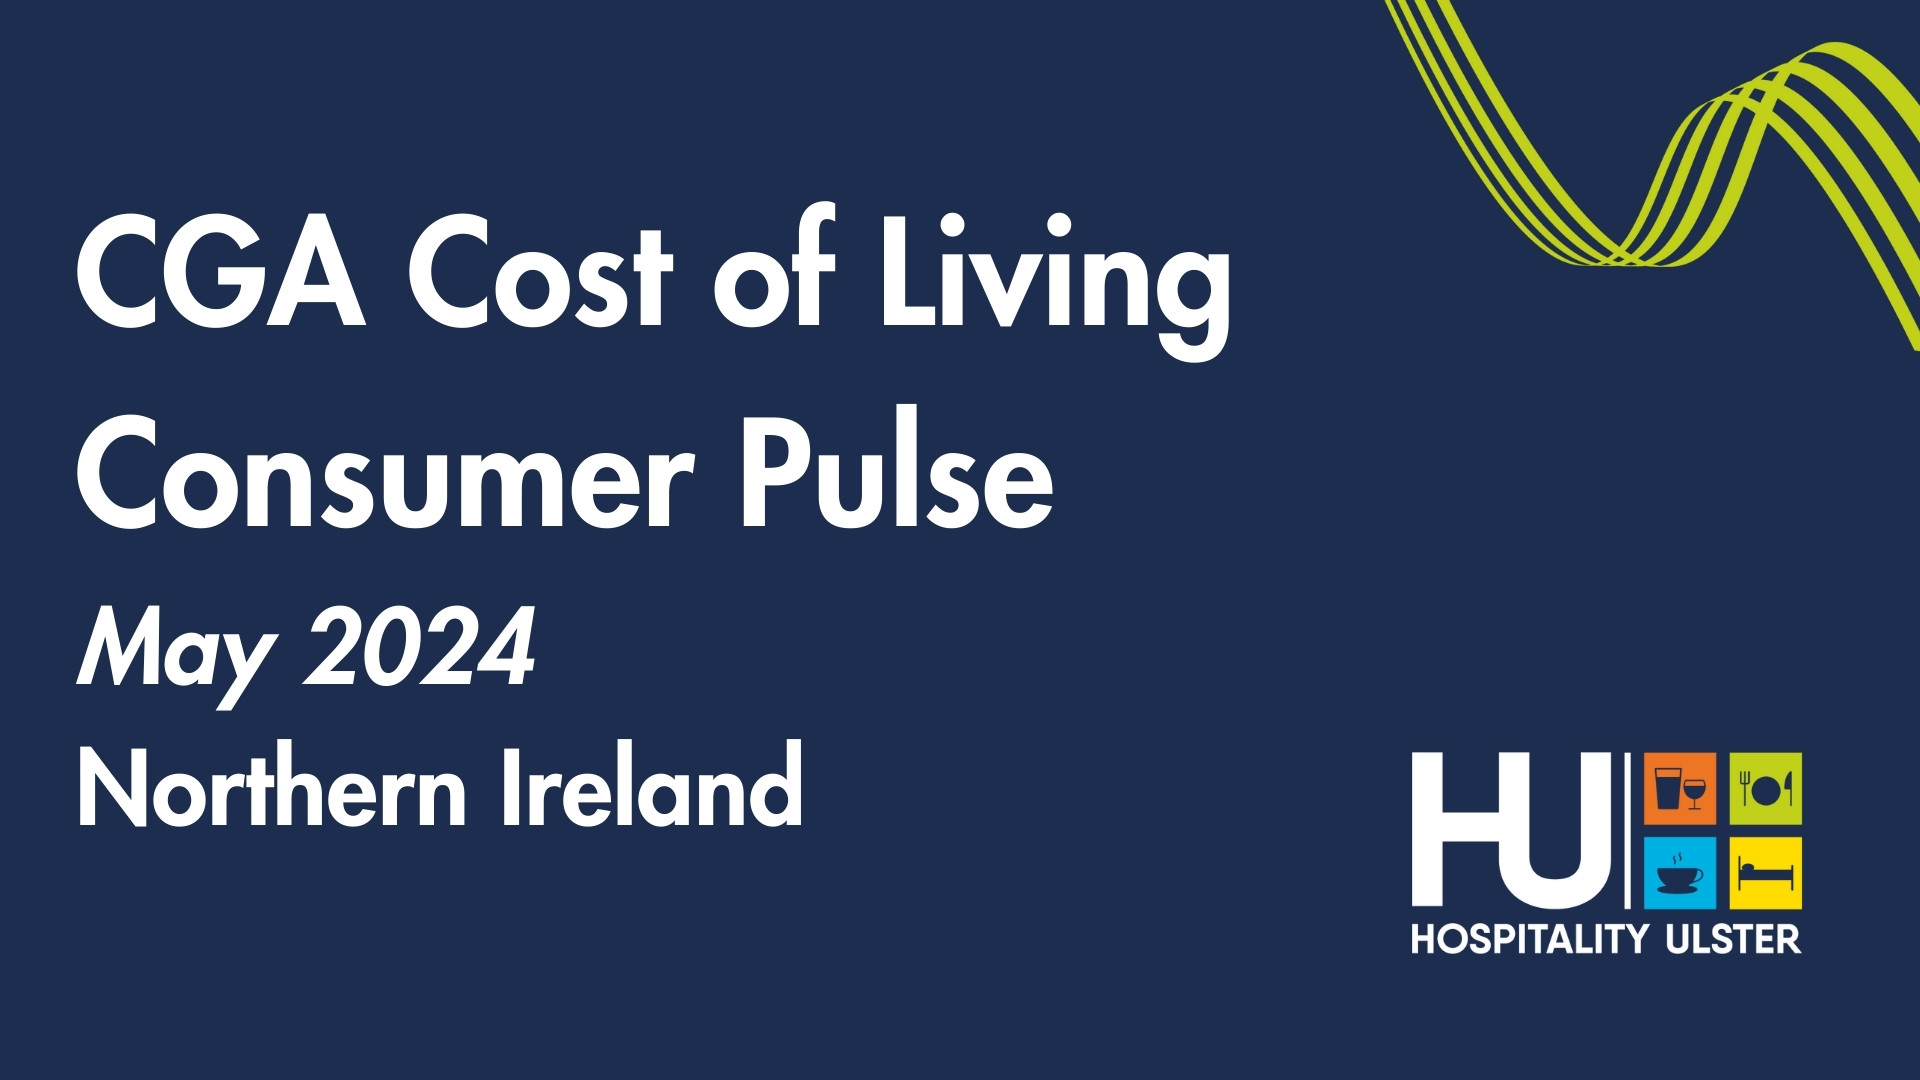 CGA COST OF LIVING CONSUMER PULSE MAY 2024 NORTHERN IRELAND